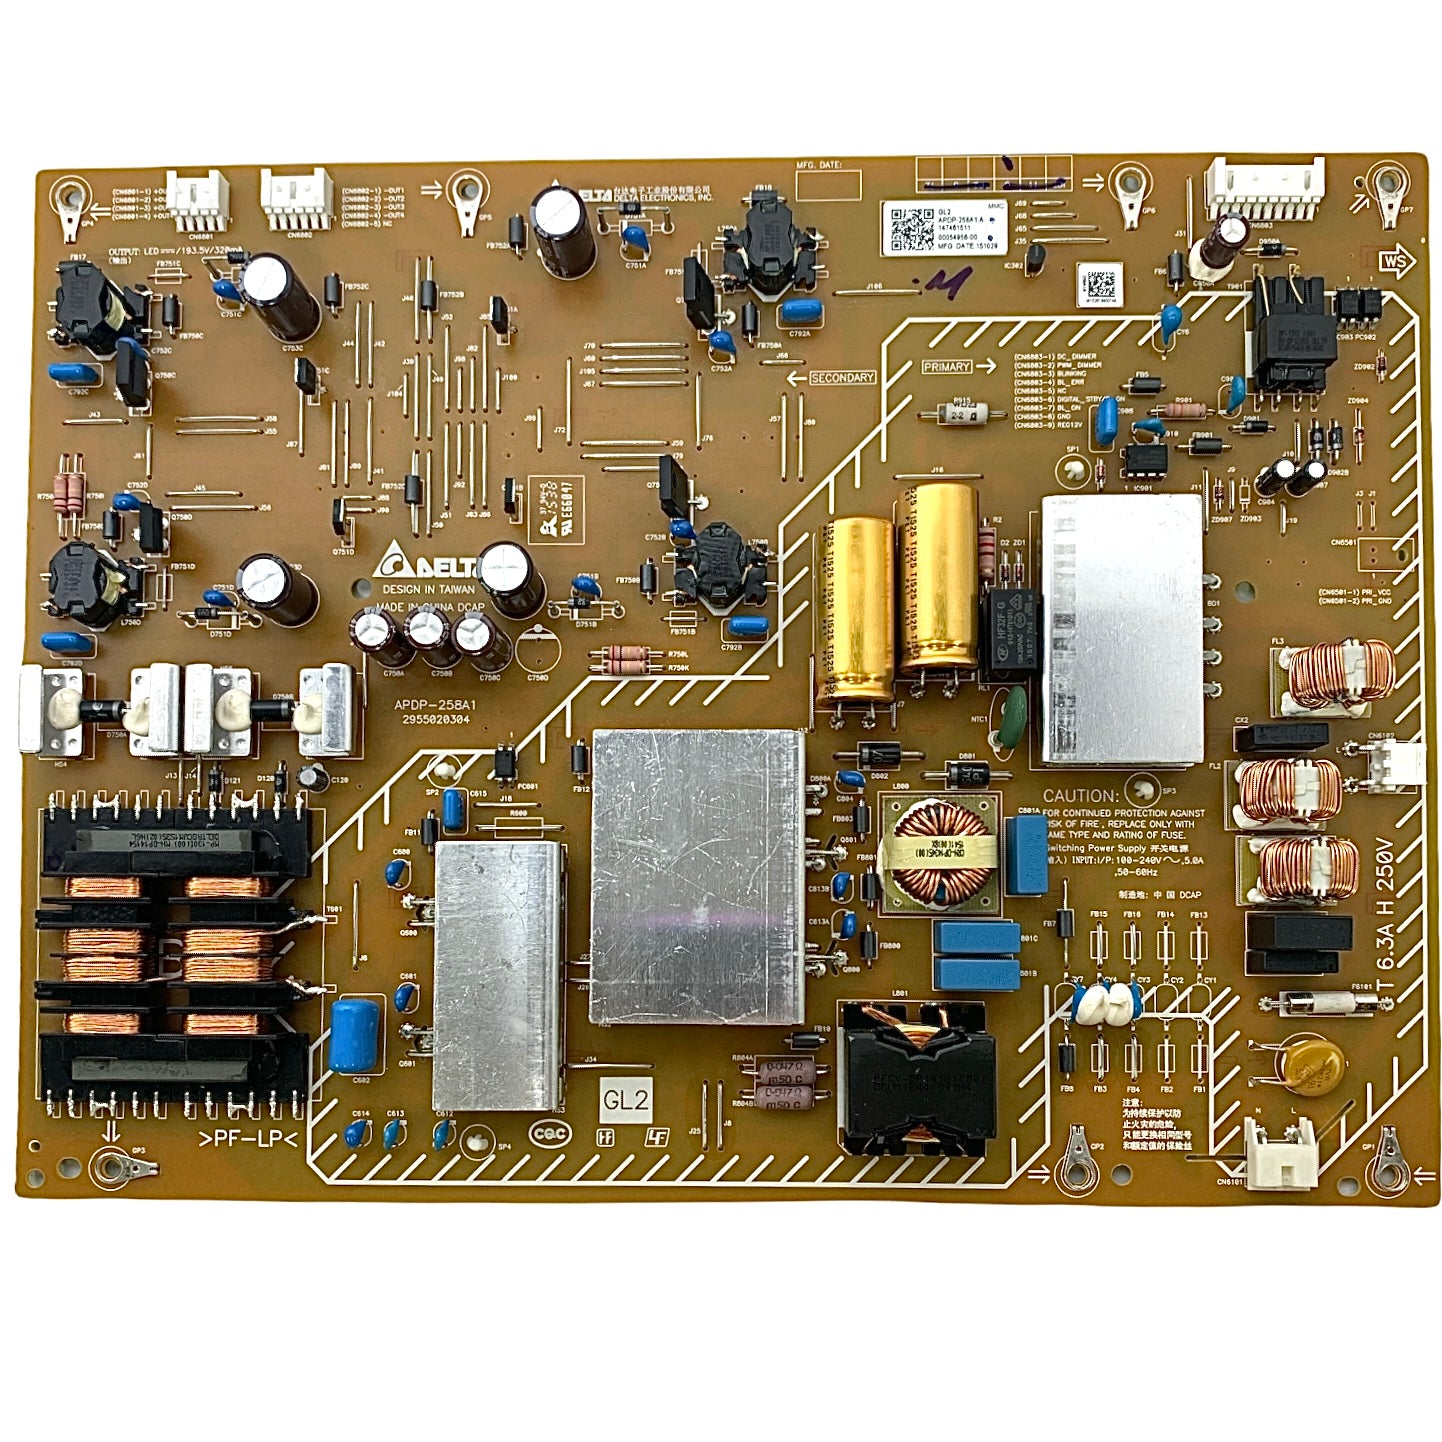 Sony 1-474-615-11 GL2 Power Supply Board